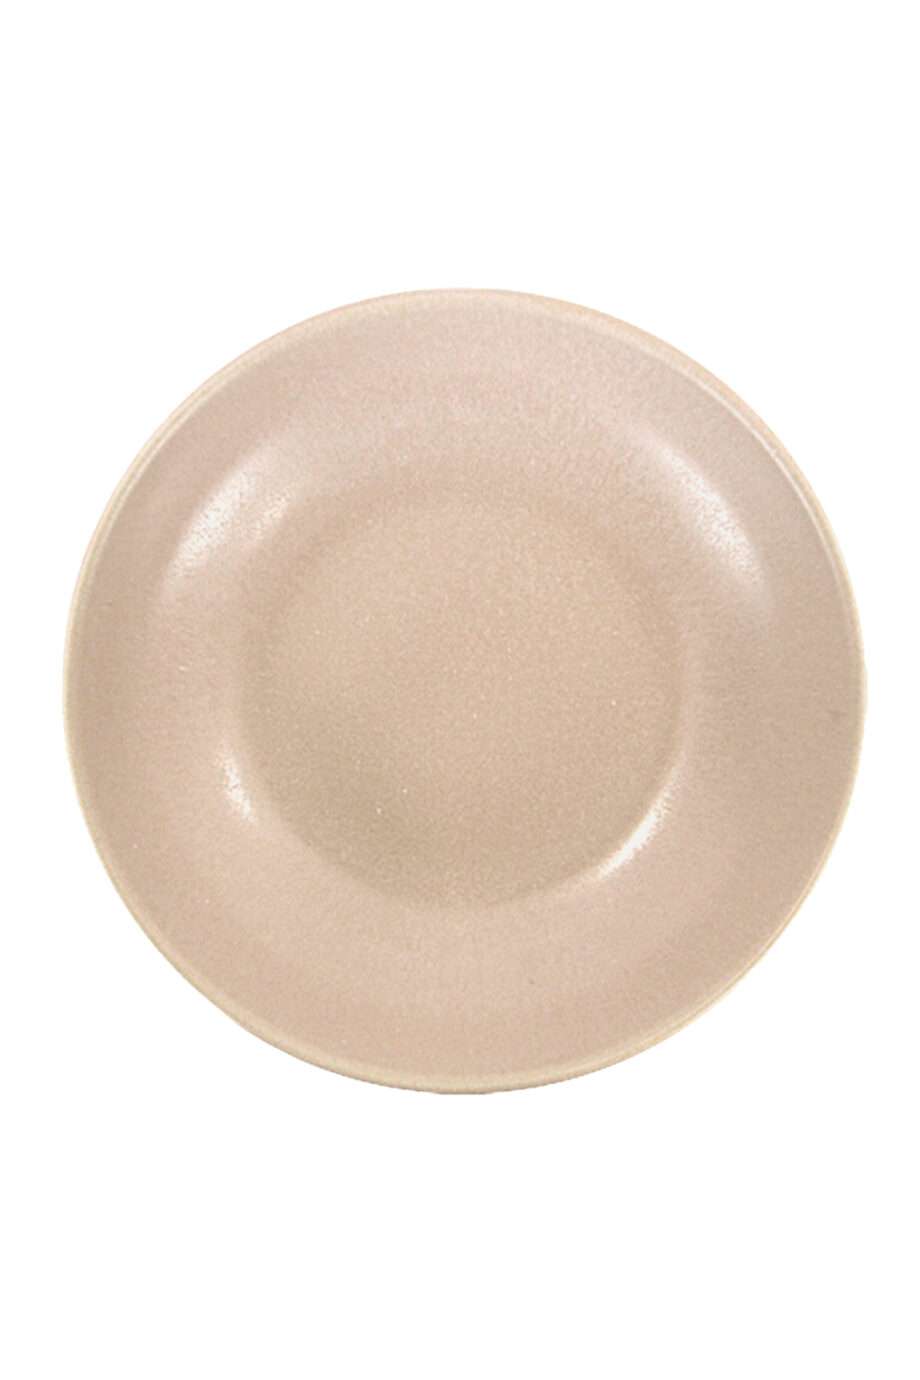 salad bowl powder rose mat ceramic large